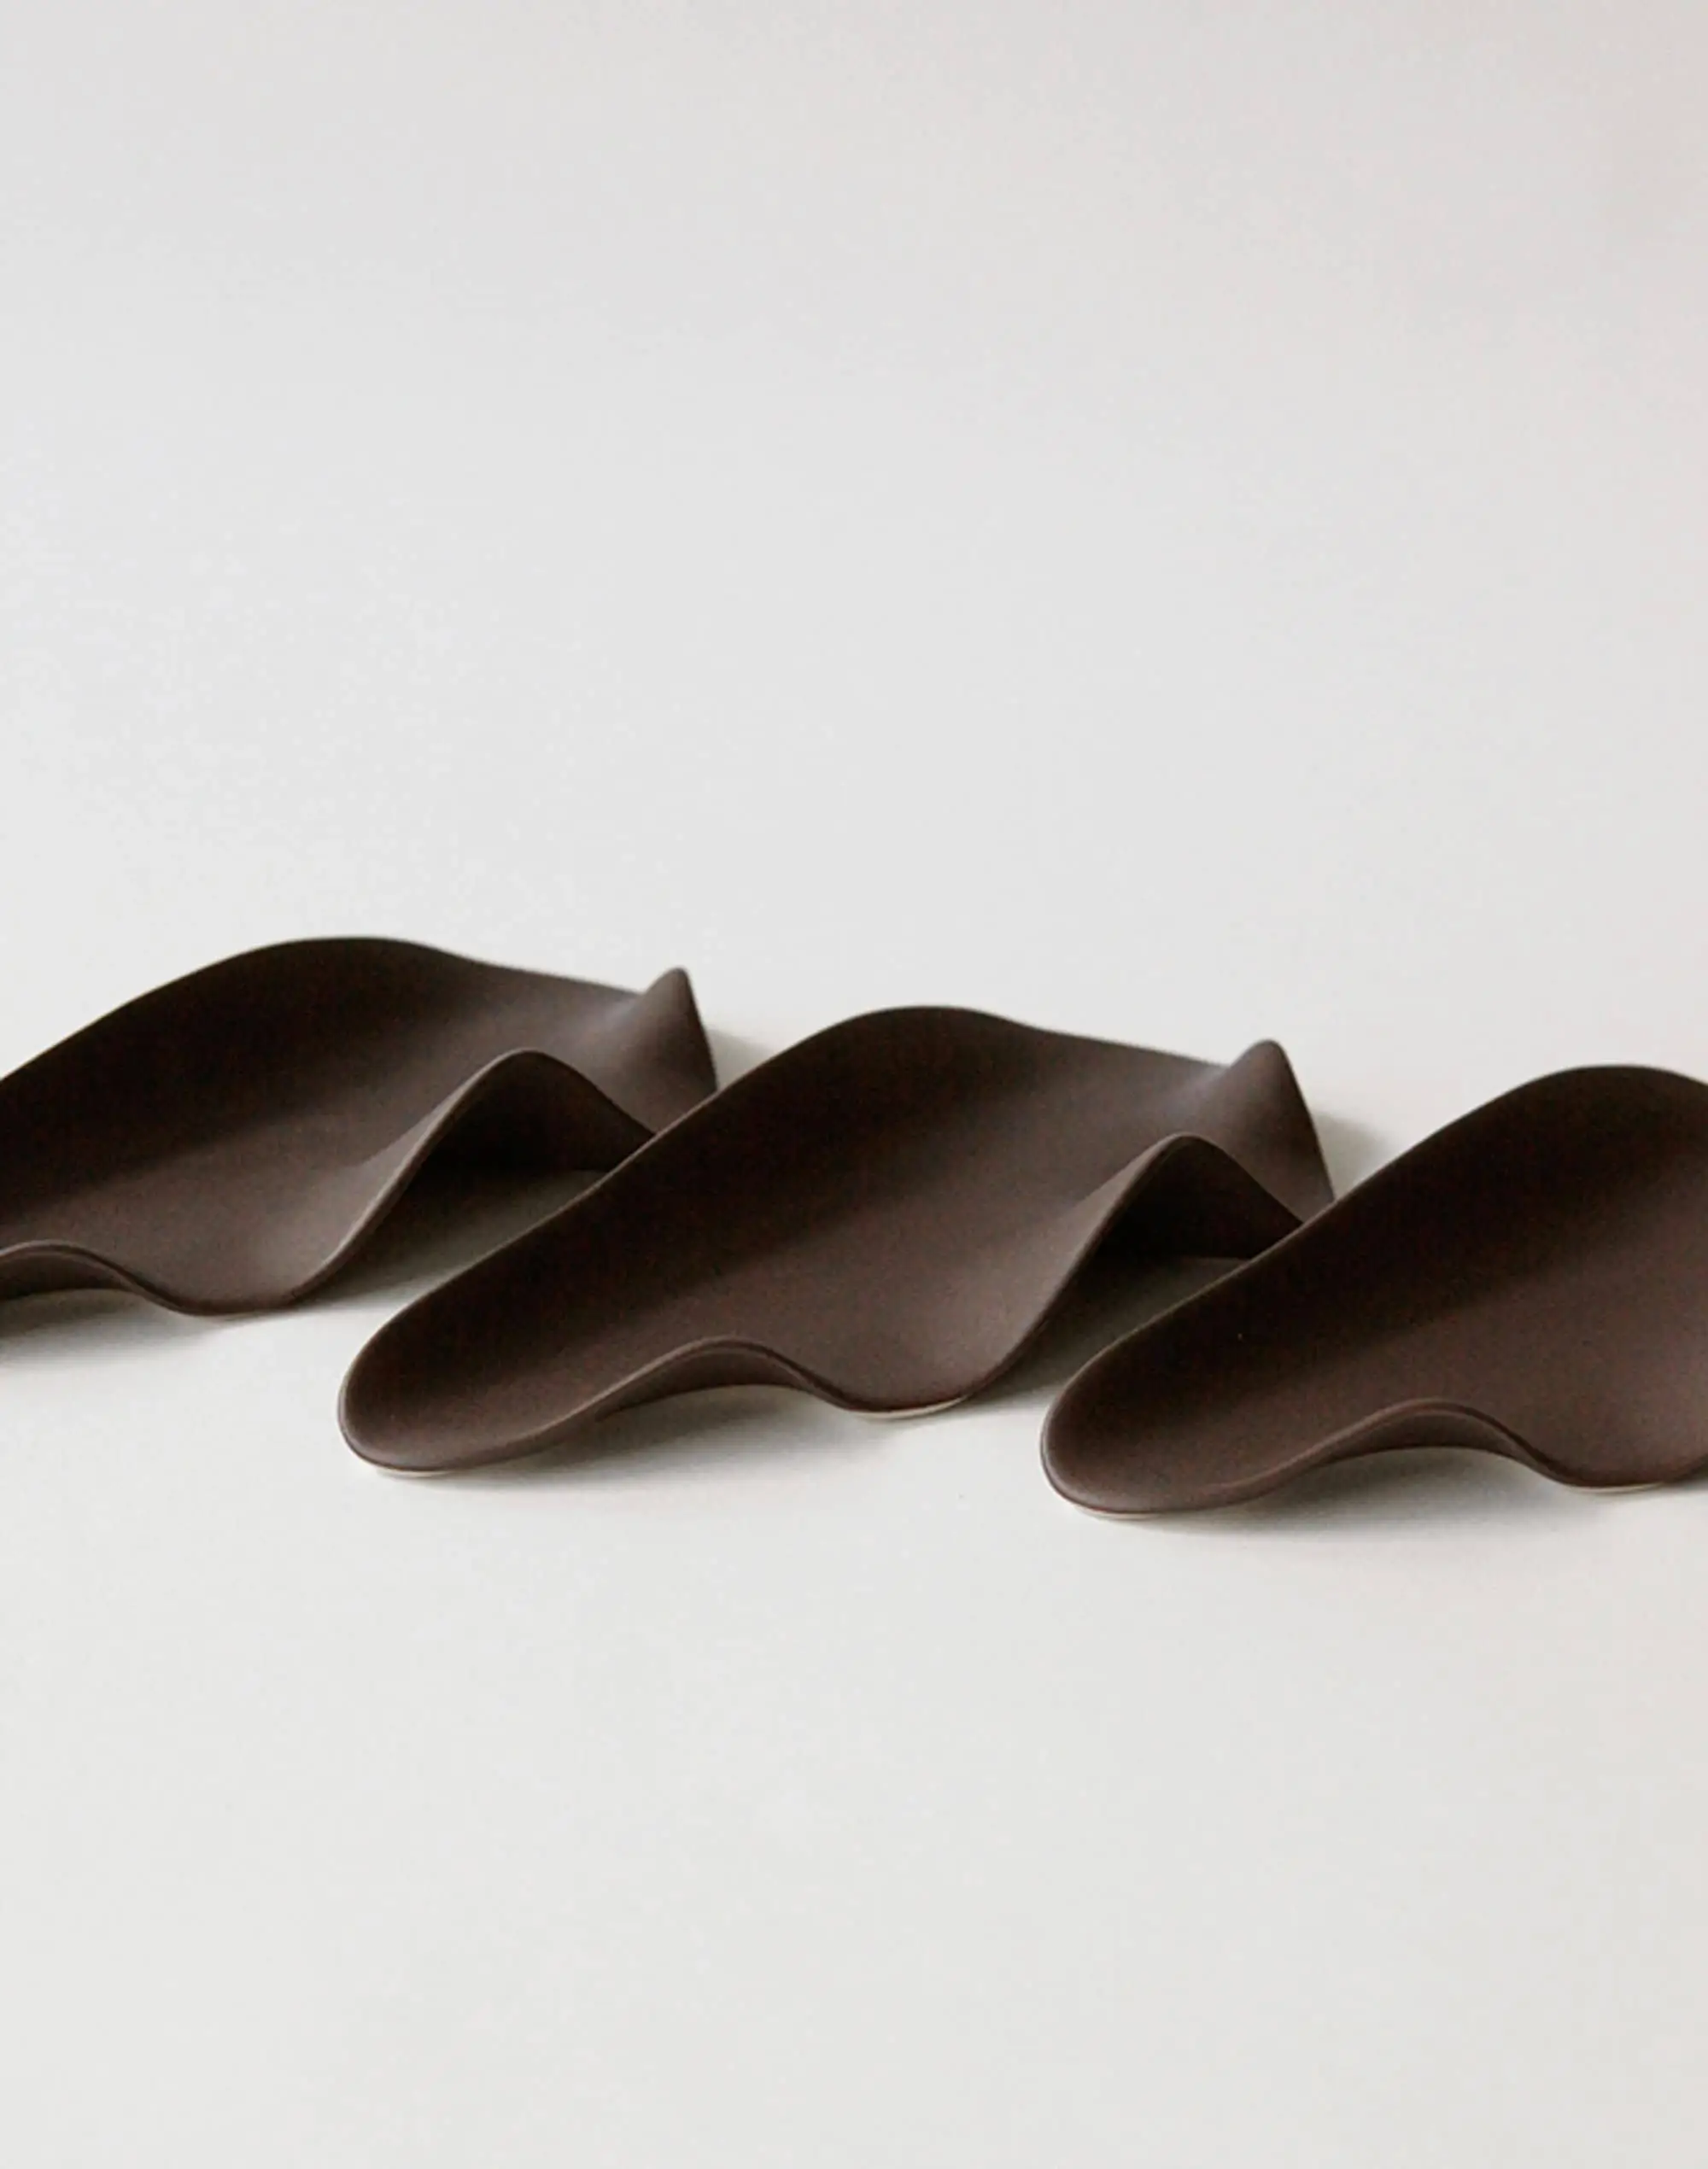 NR Ceramics HIN Leaf Plate Brown 6